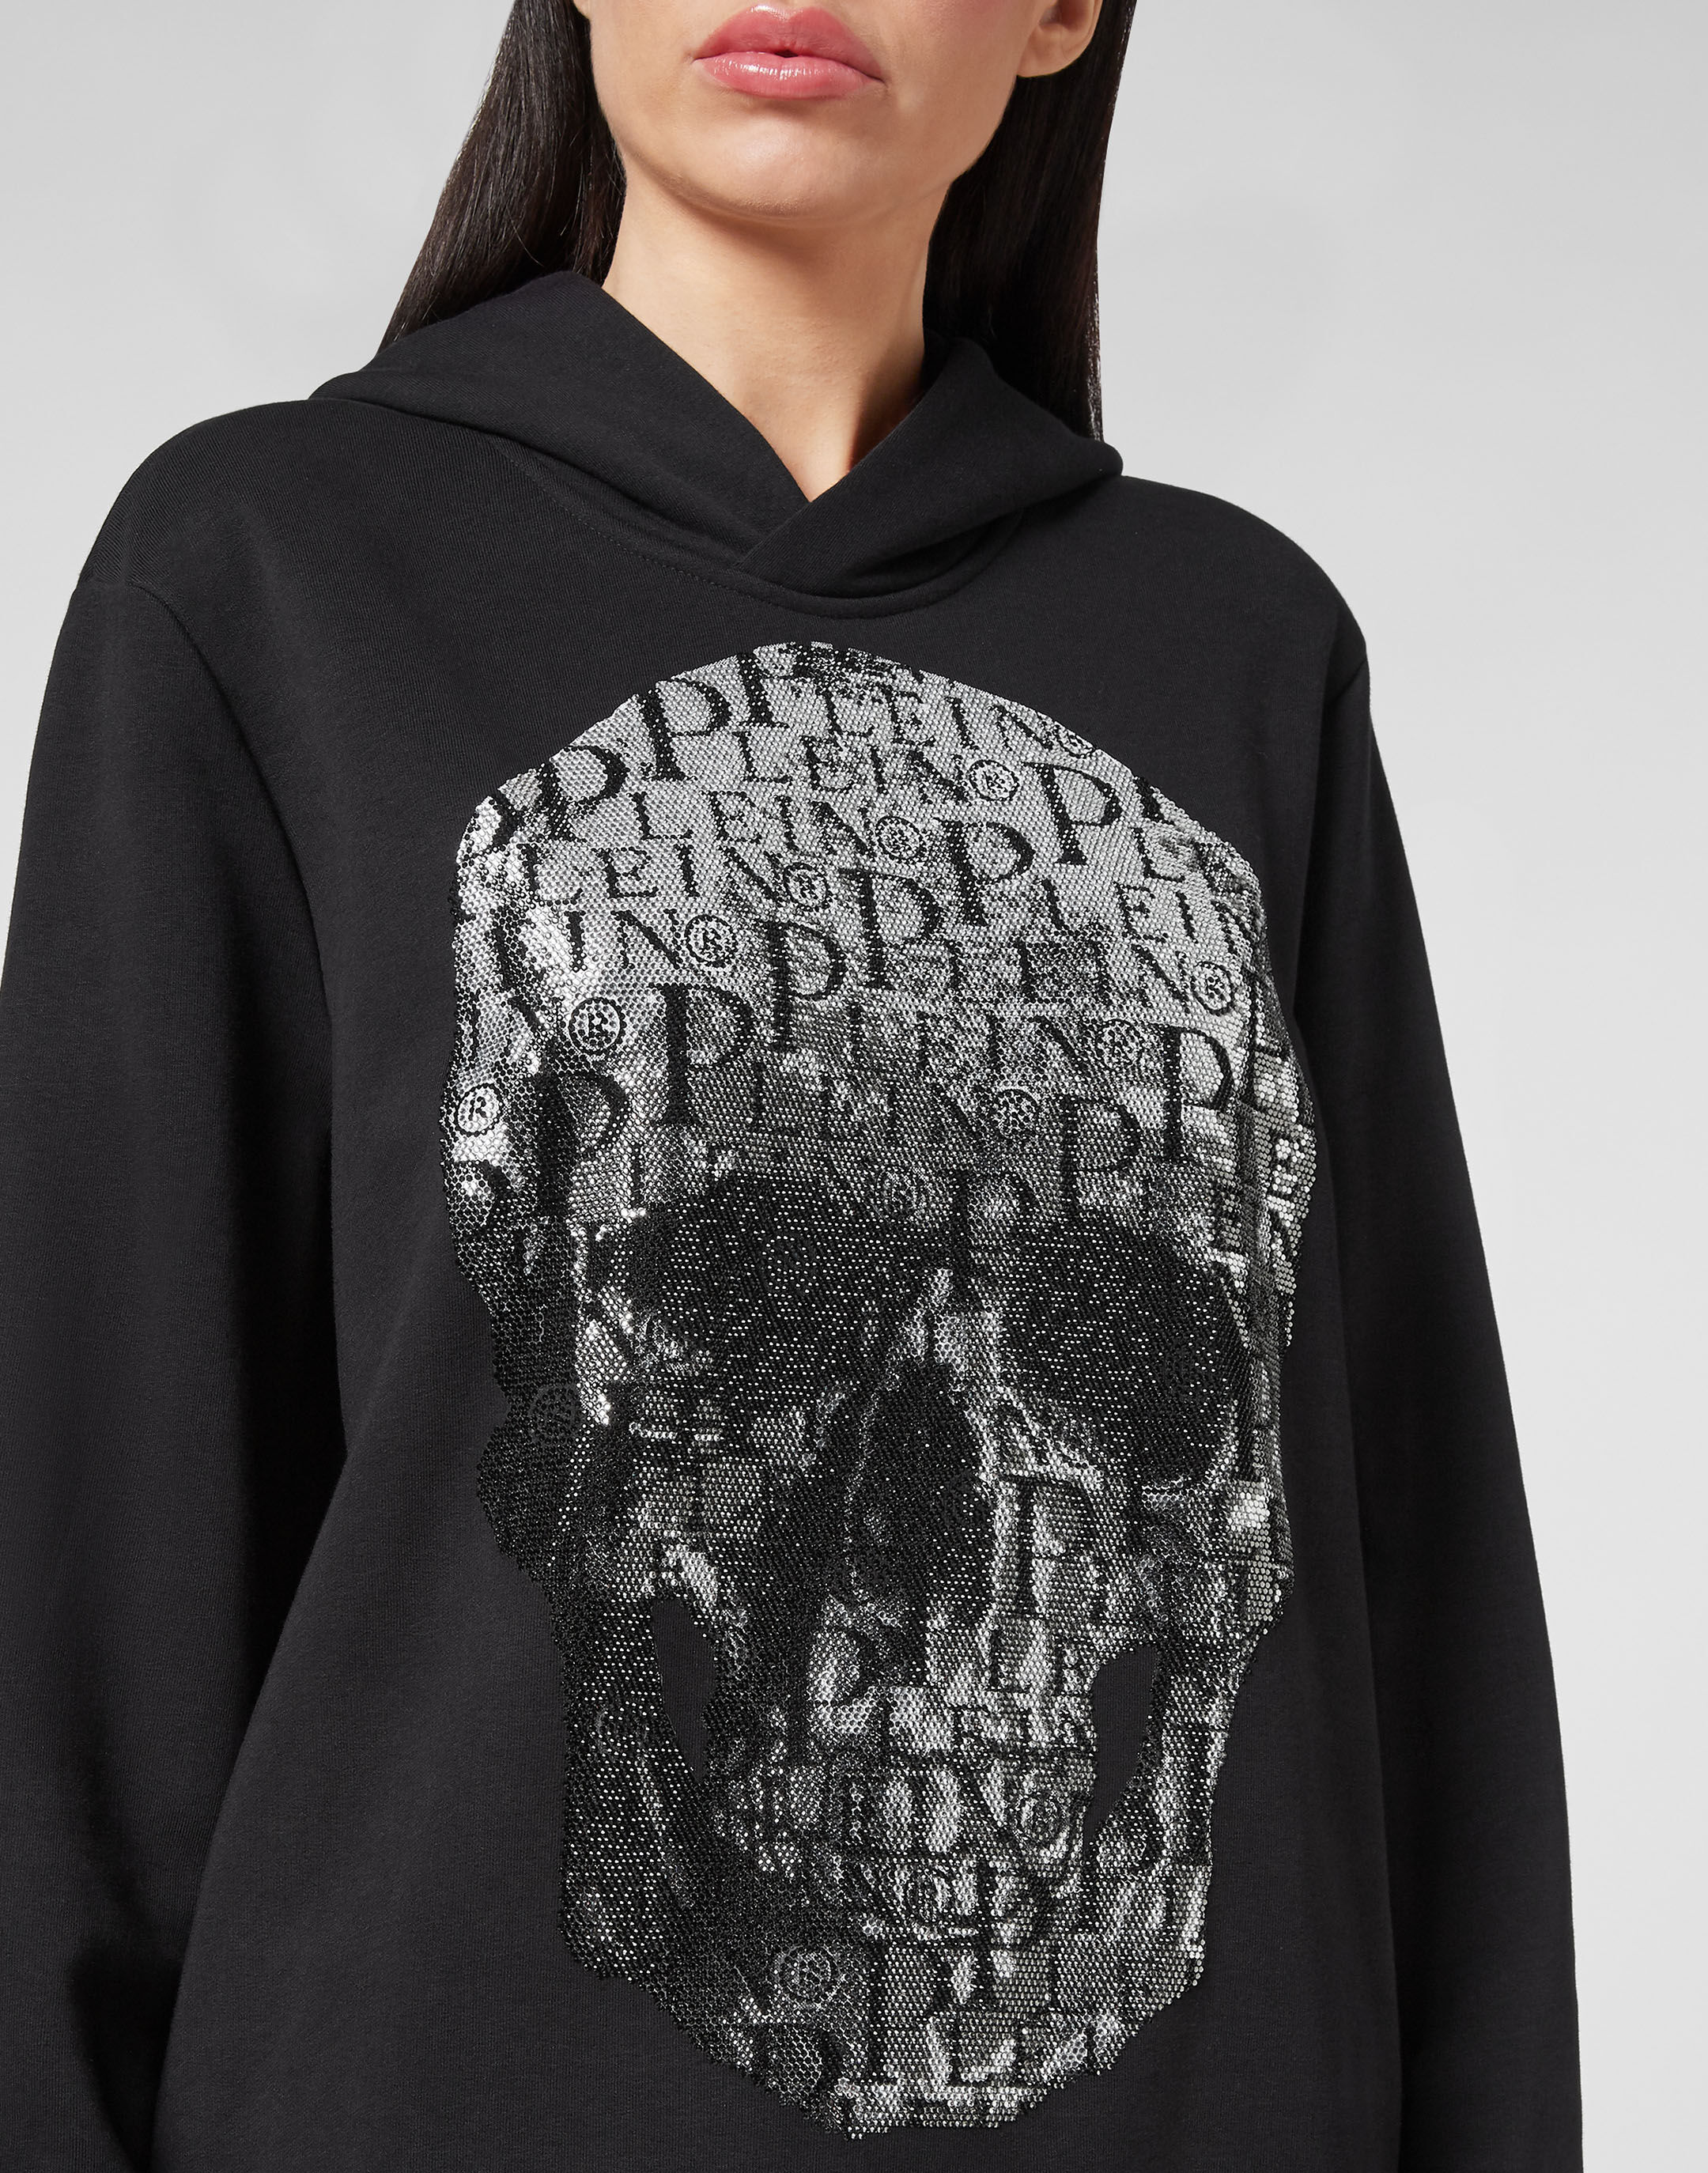 Hoodie sweatshirt Stones Skull and Plein | Philipp Plein Outlet